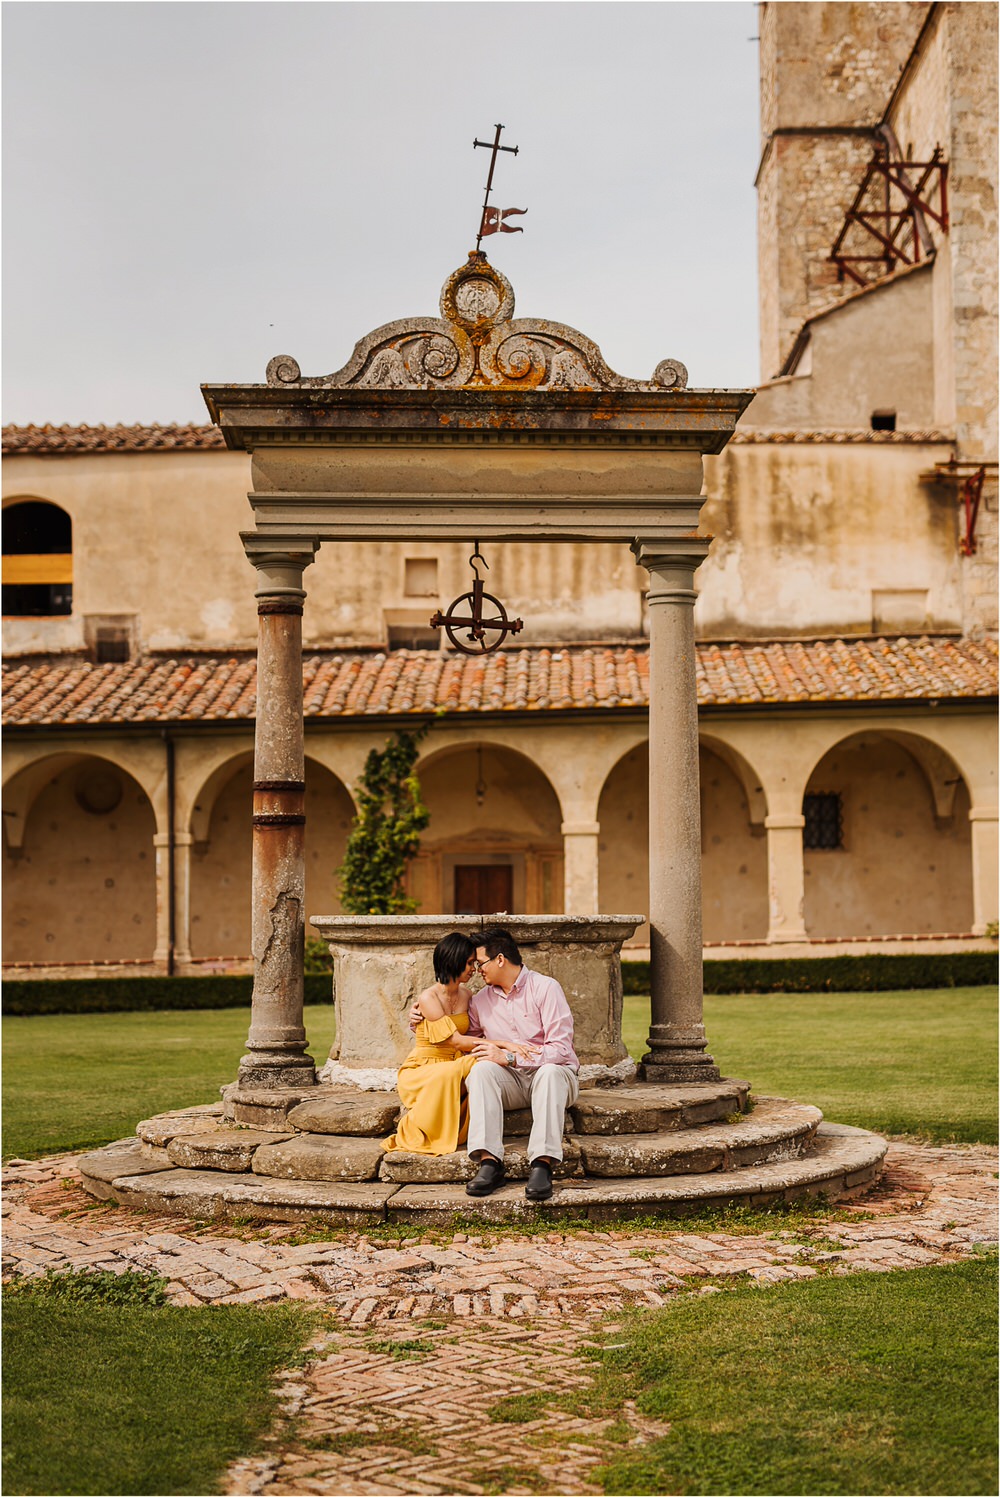 tuscany siena wedding anniversary honeymoon photography photographer italy matrimonio destination val d'orcia toscana 0027.jpg